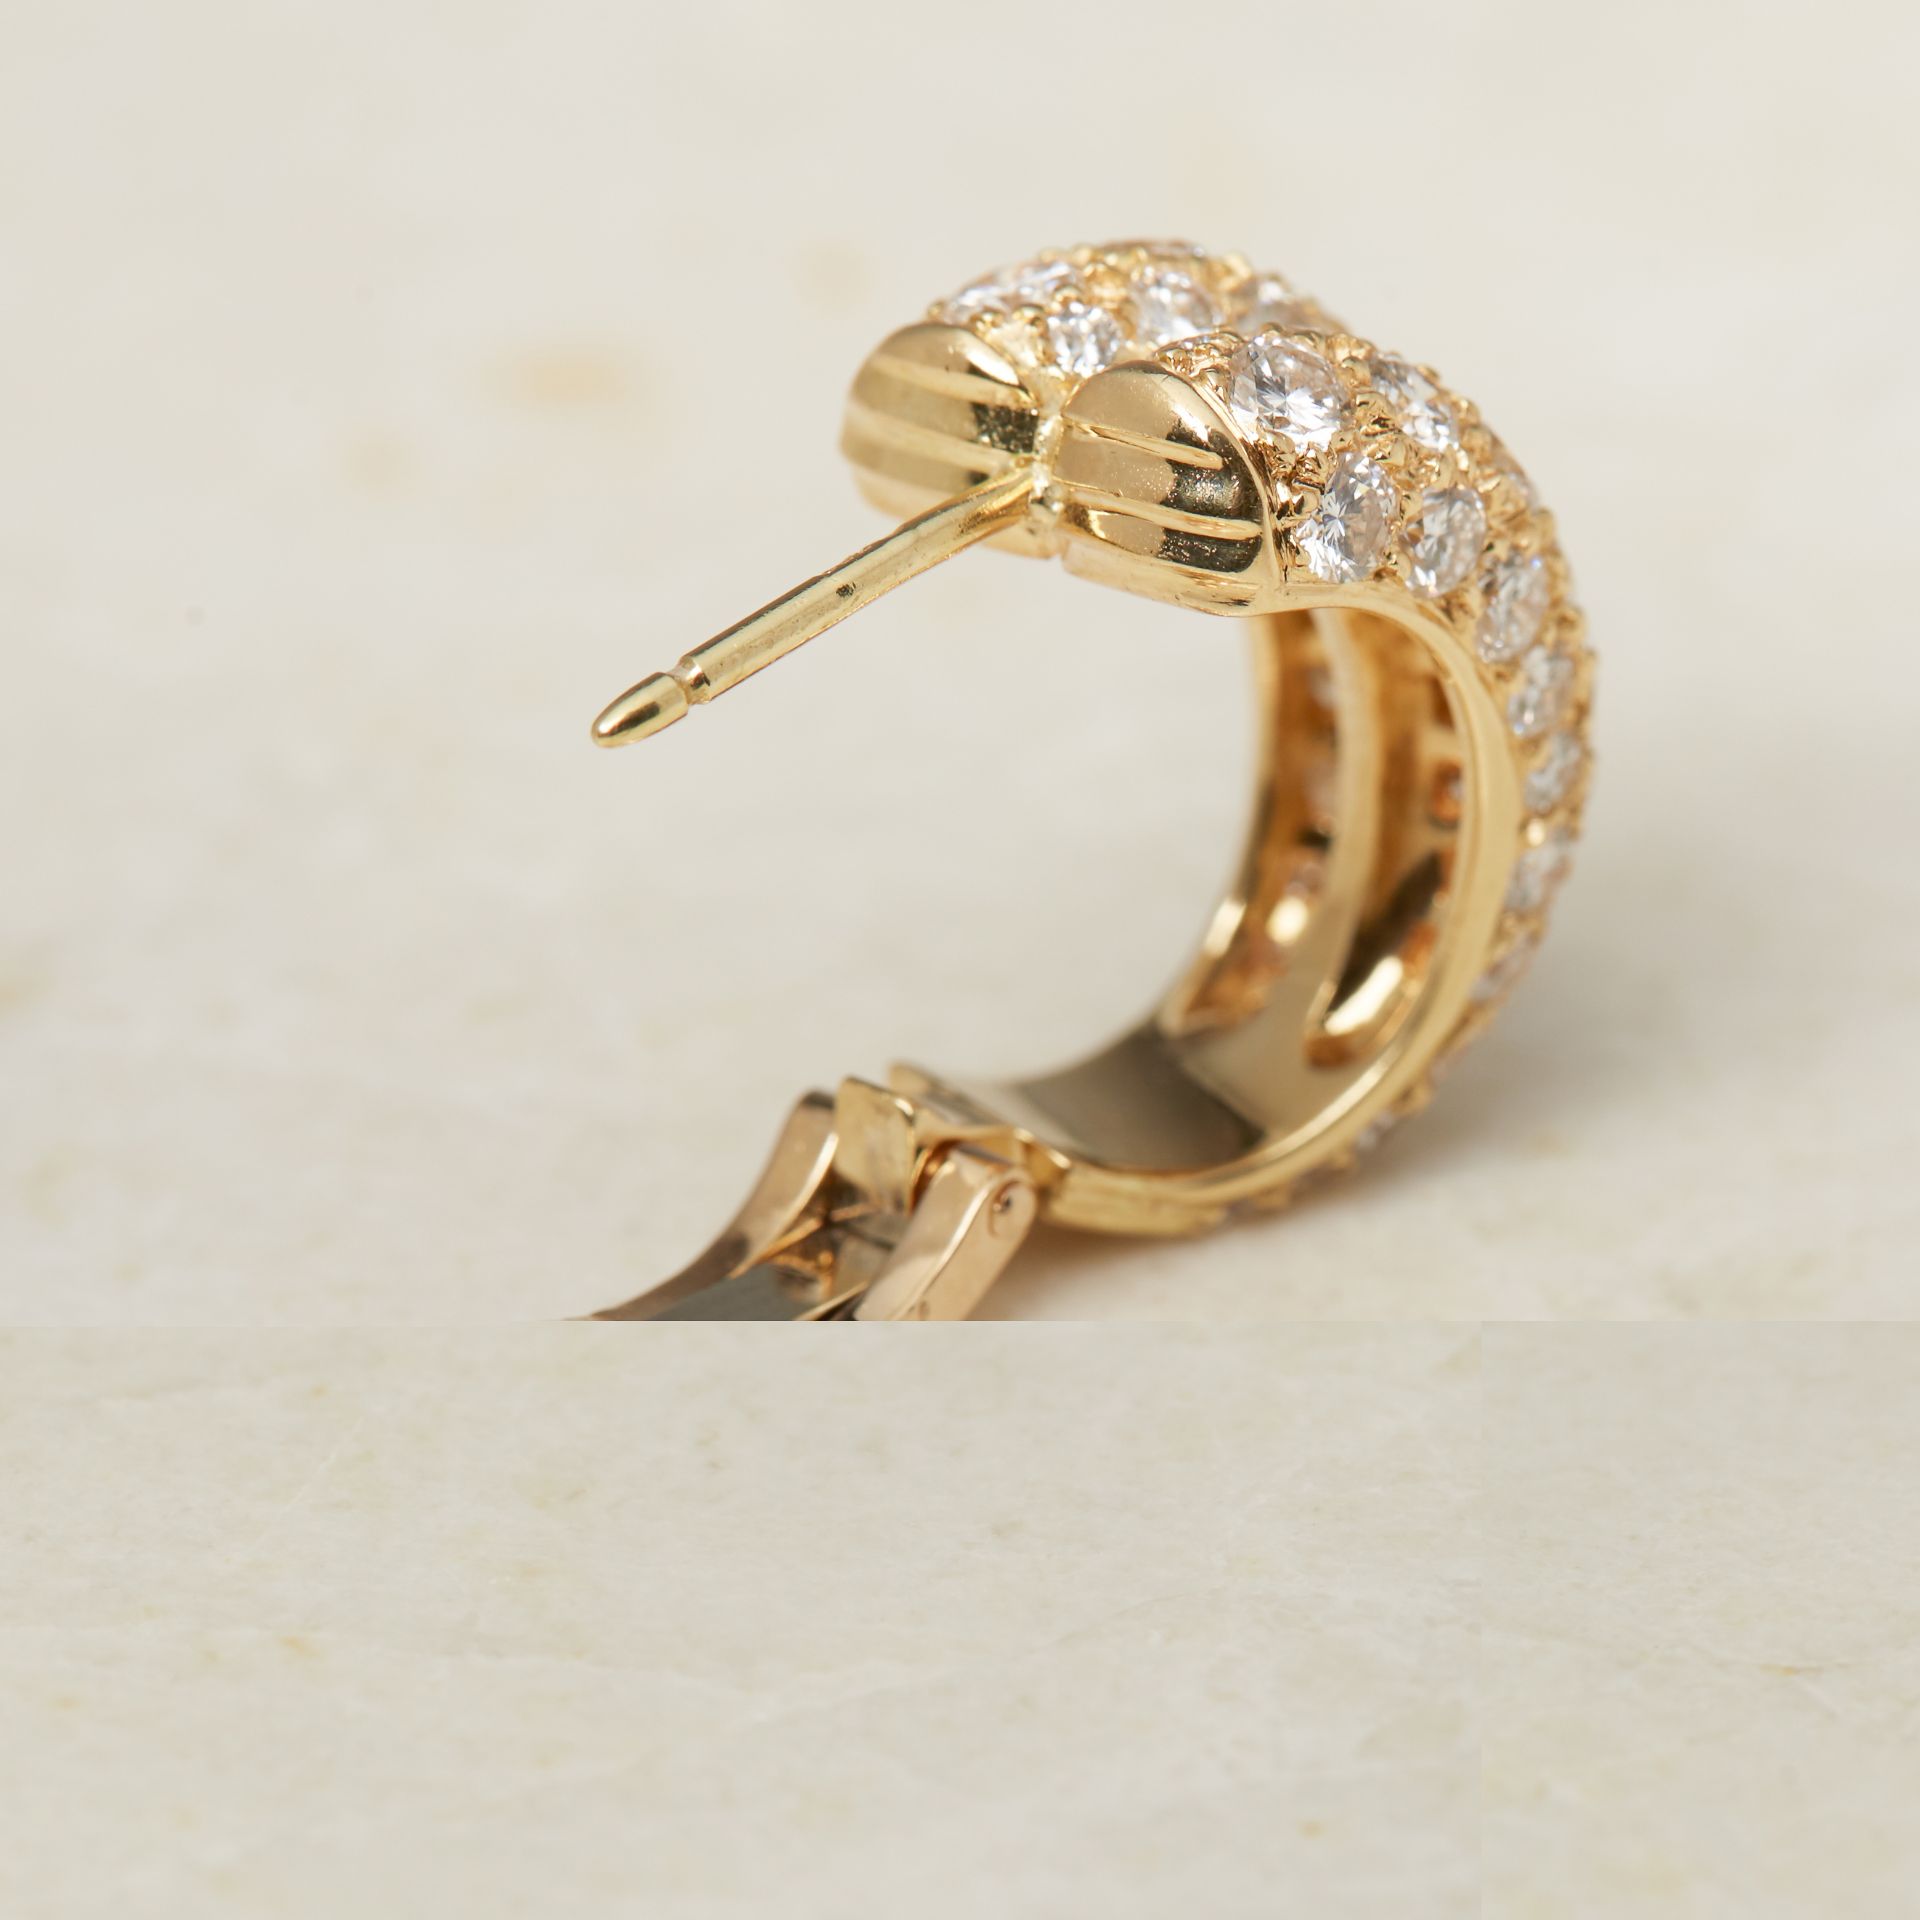 Cartier 18k Yellow Gold Diamond Double Hoop Earrings - Image 13 of 22